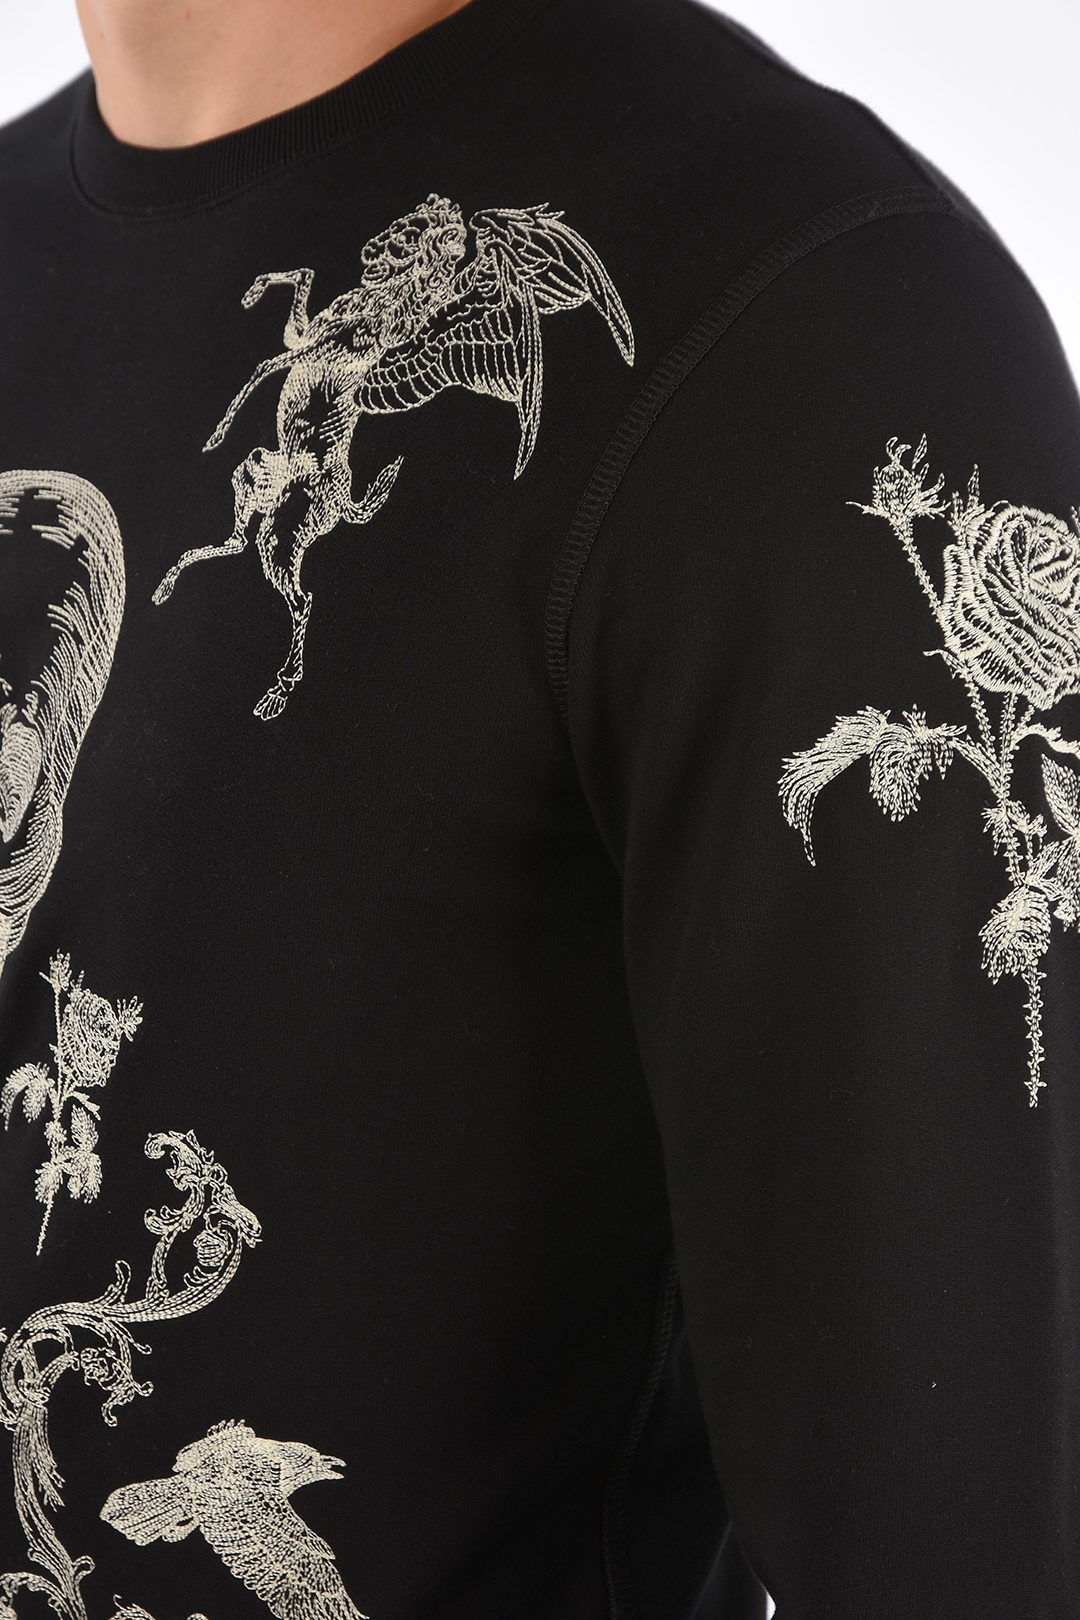 embroidered sweatshirt men - Glamood Outlet